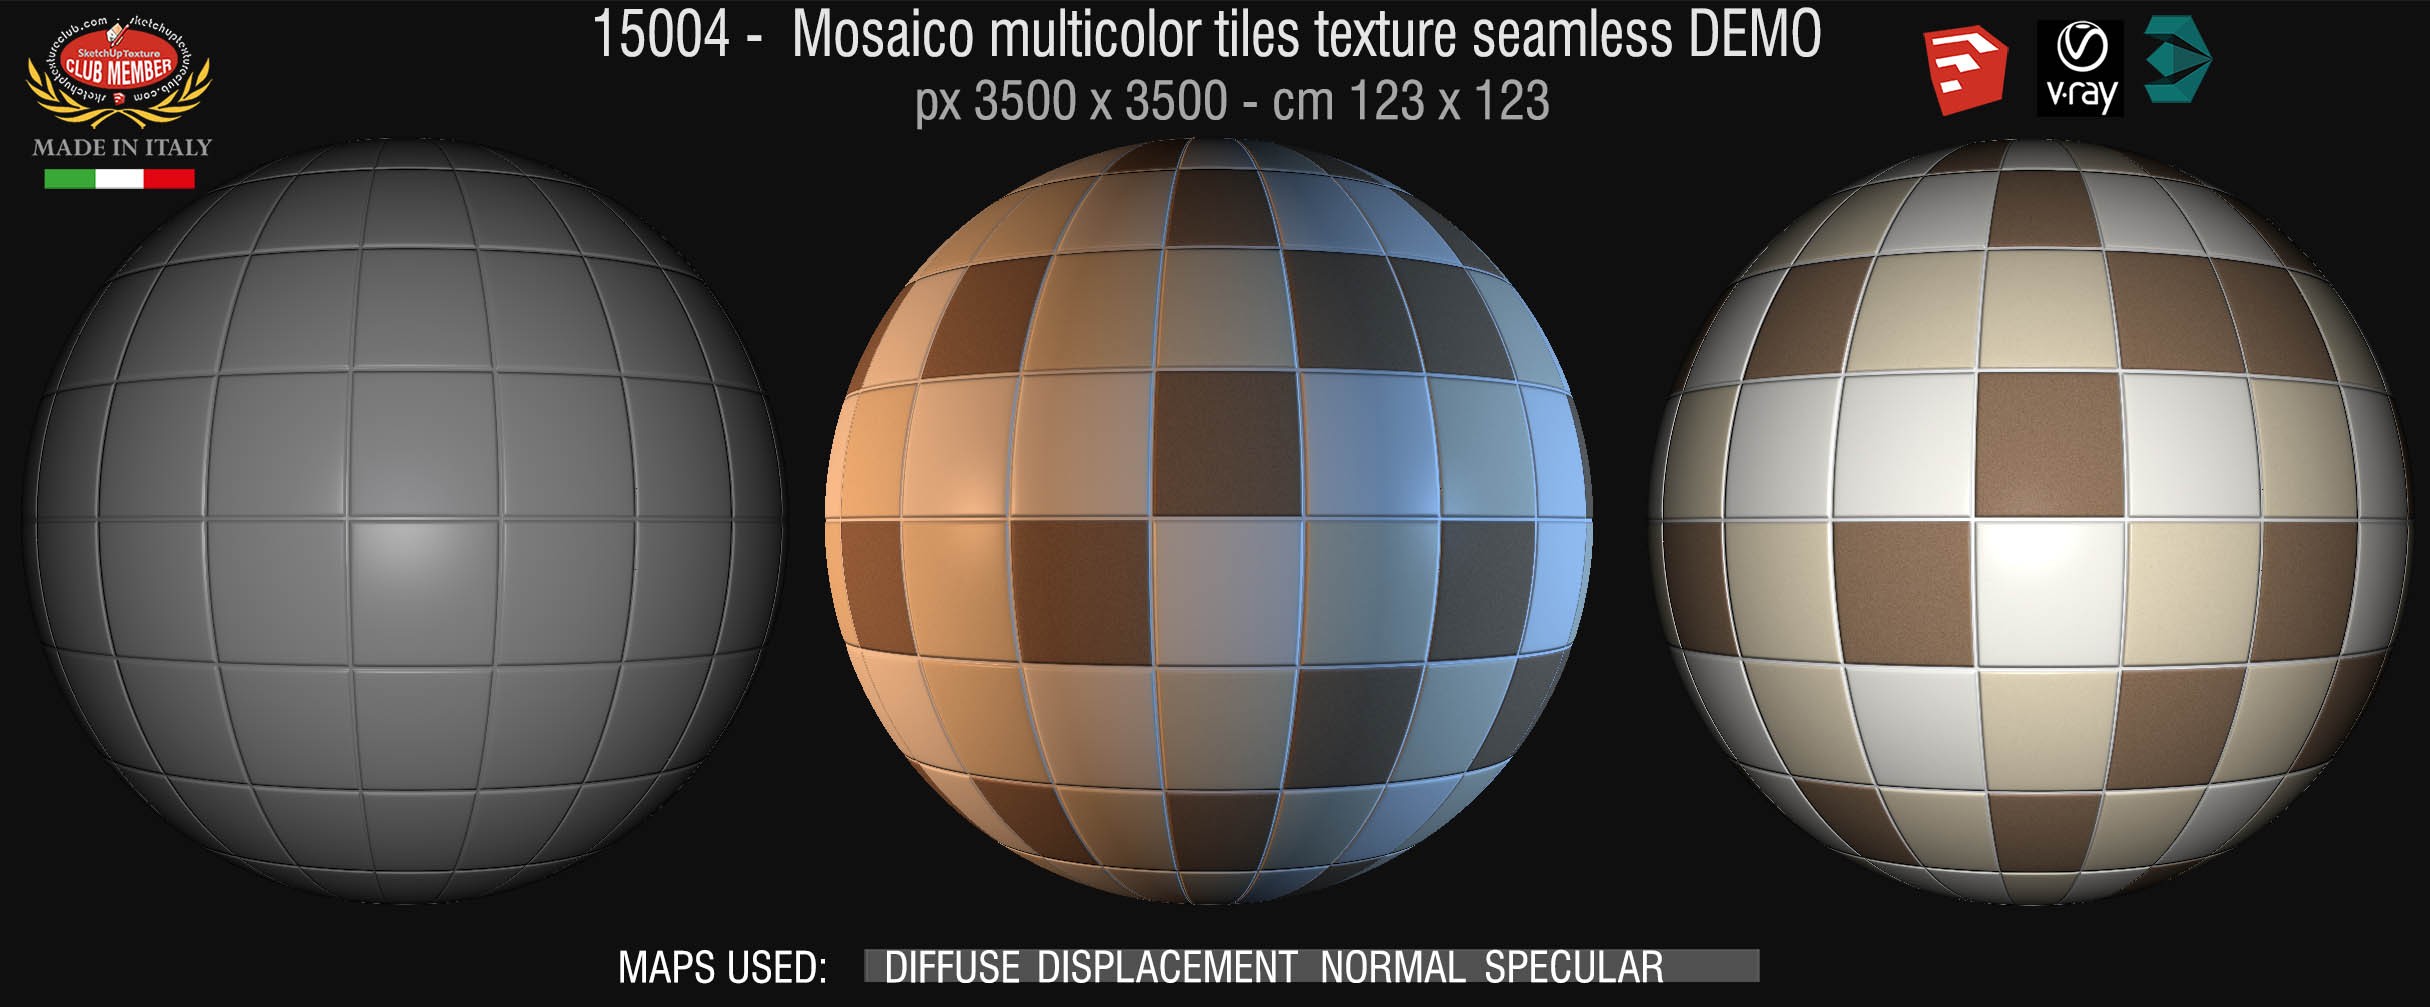 15004 Mosaico multicolor tiles texture seamless + maps DEMO